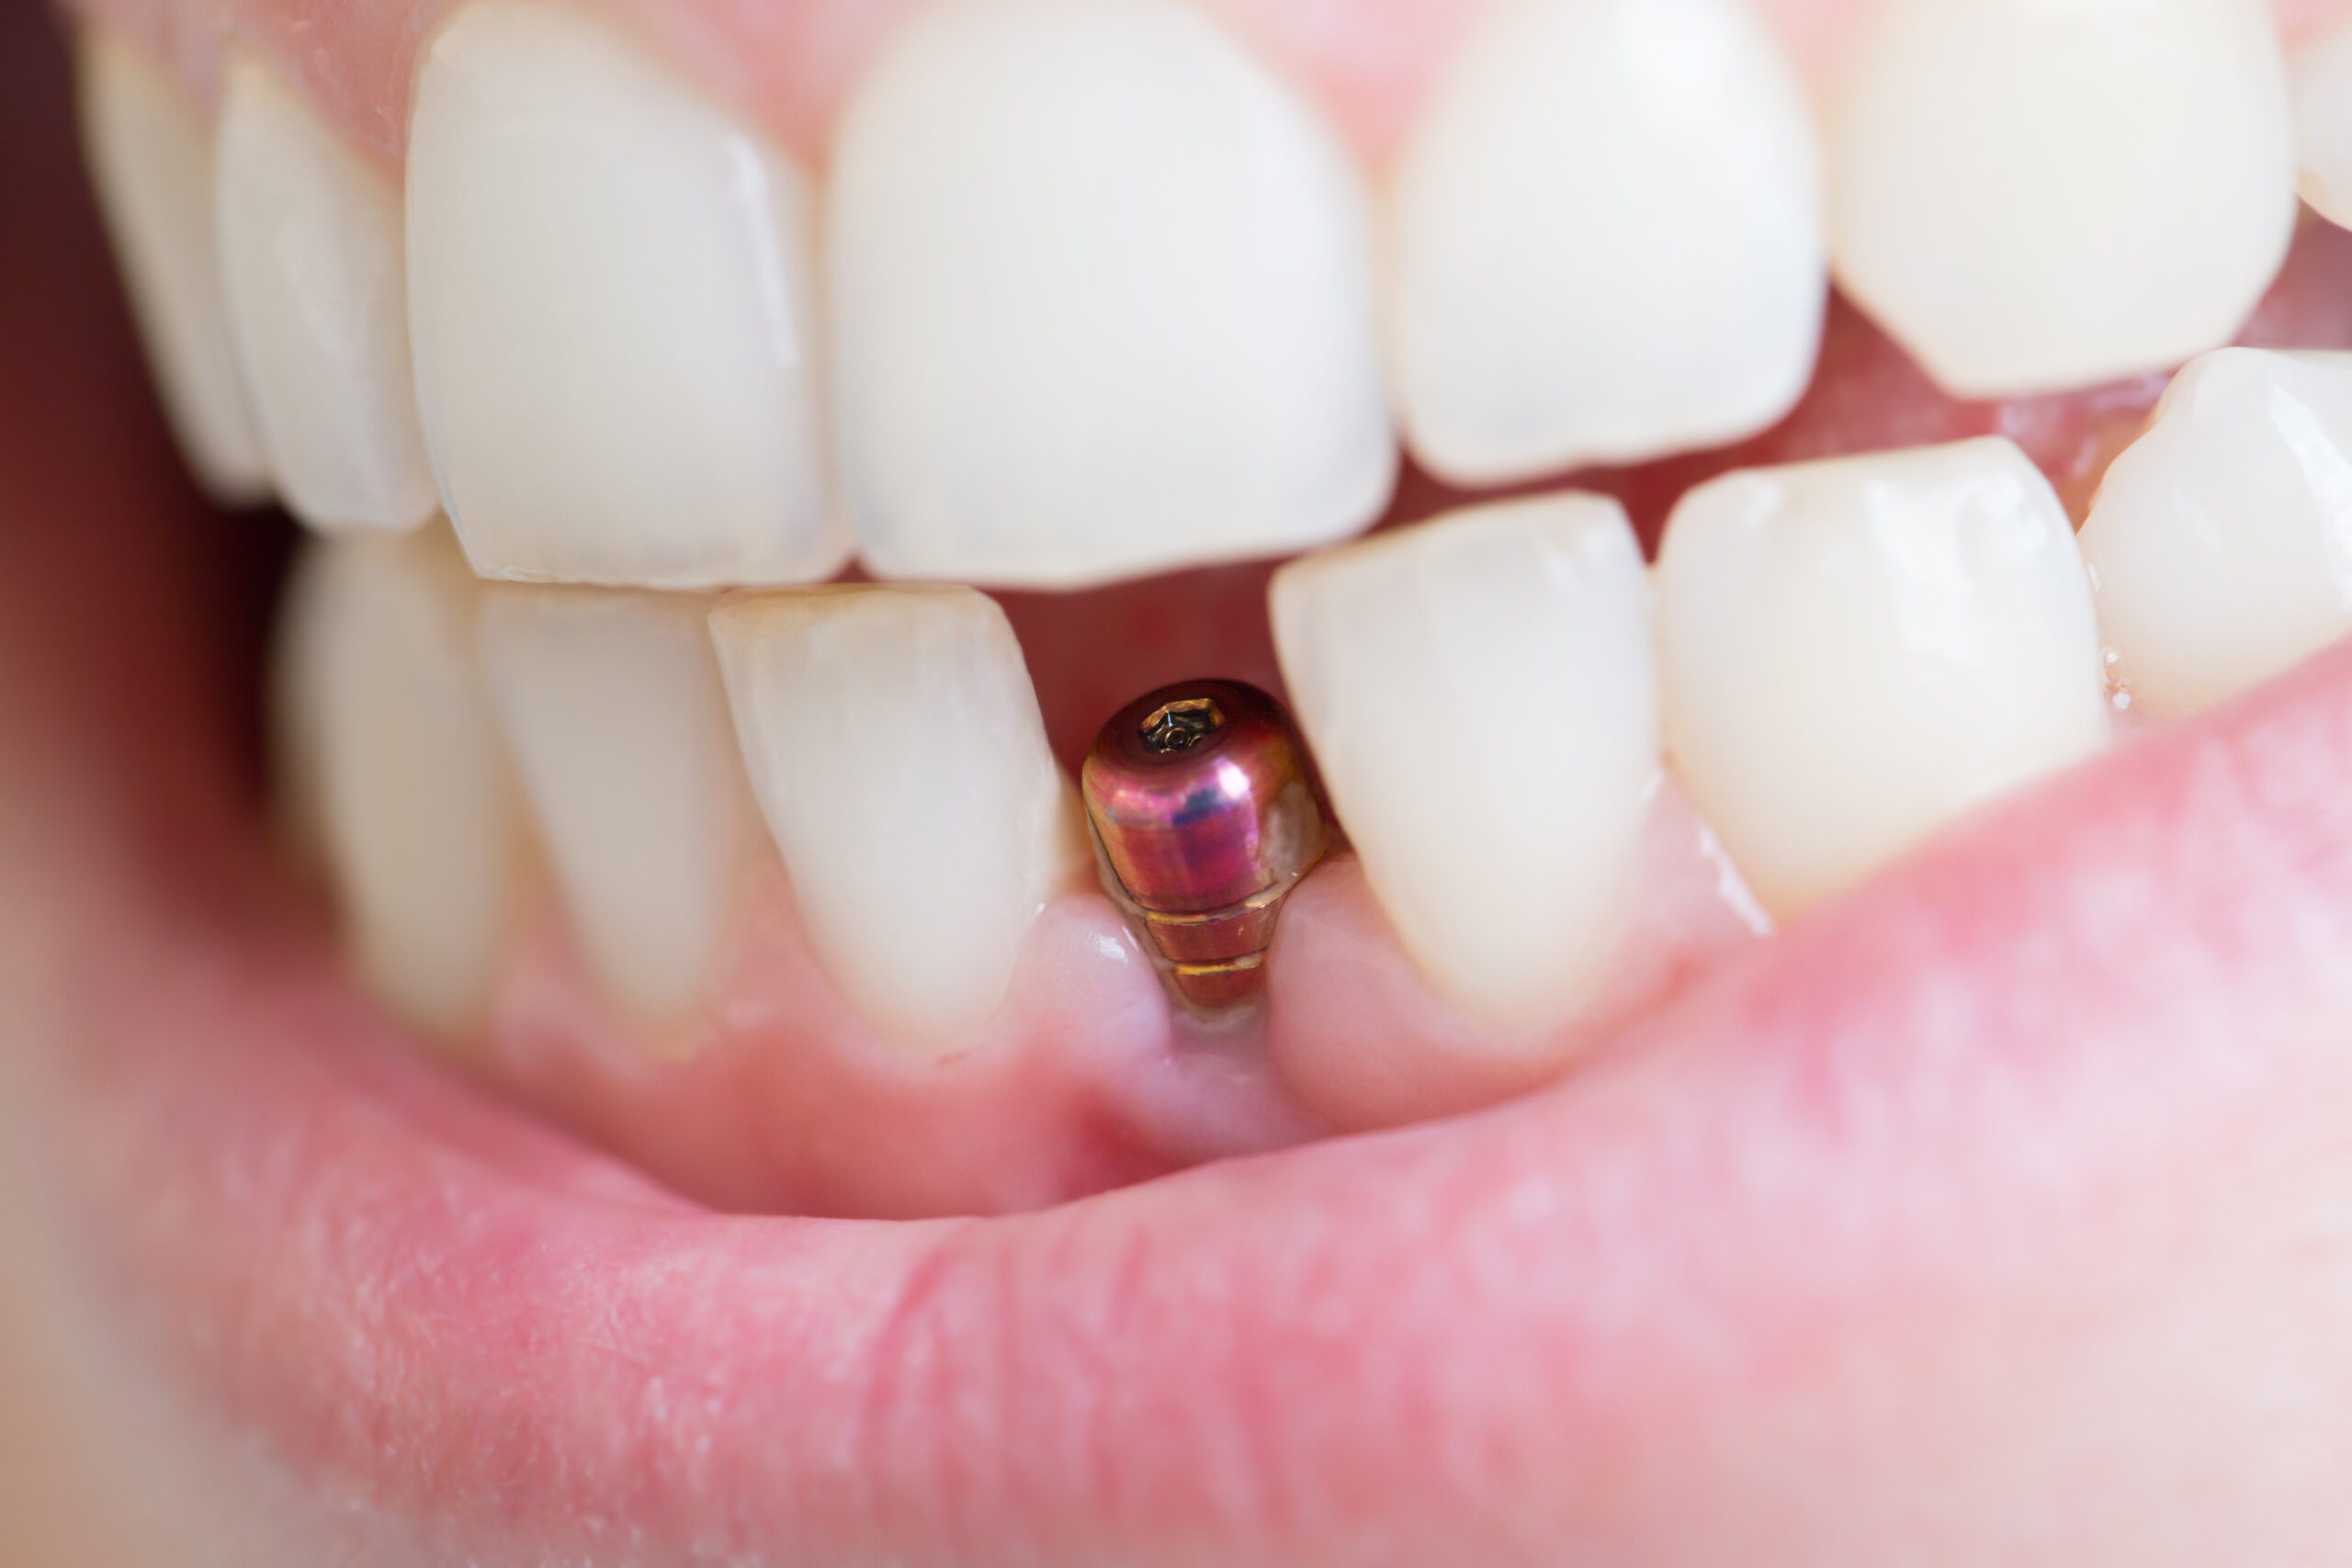 Dental-Implants-scaled